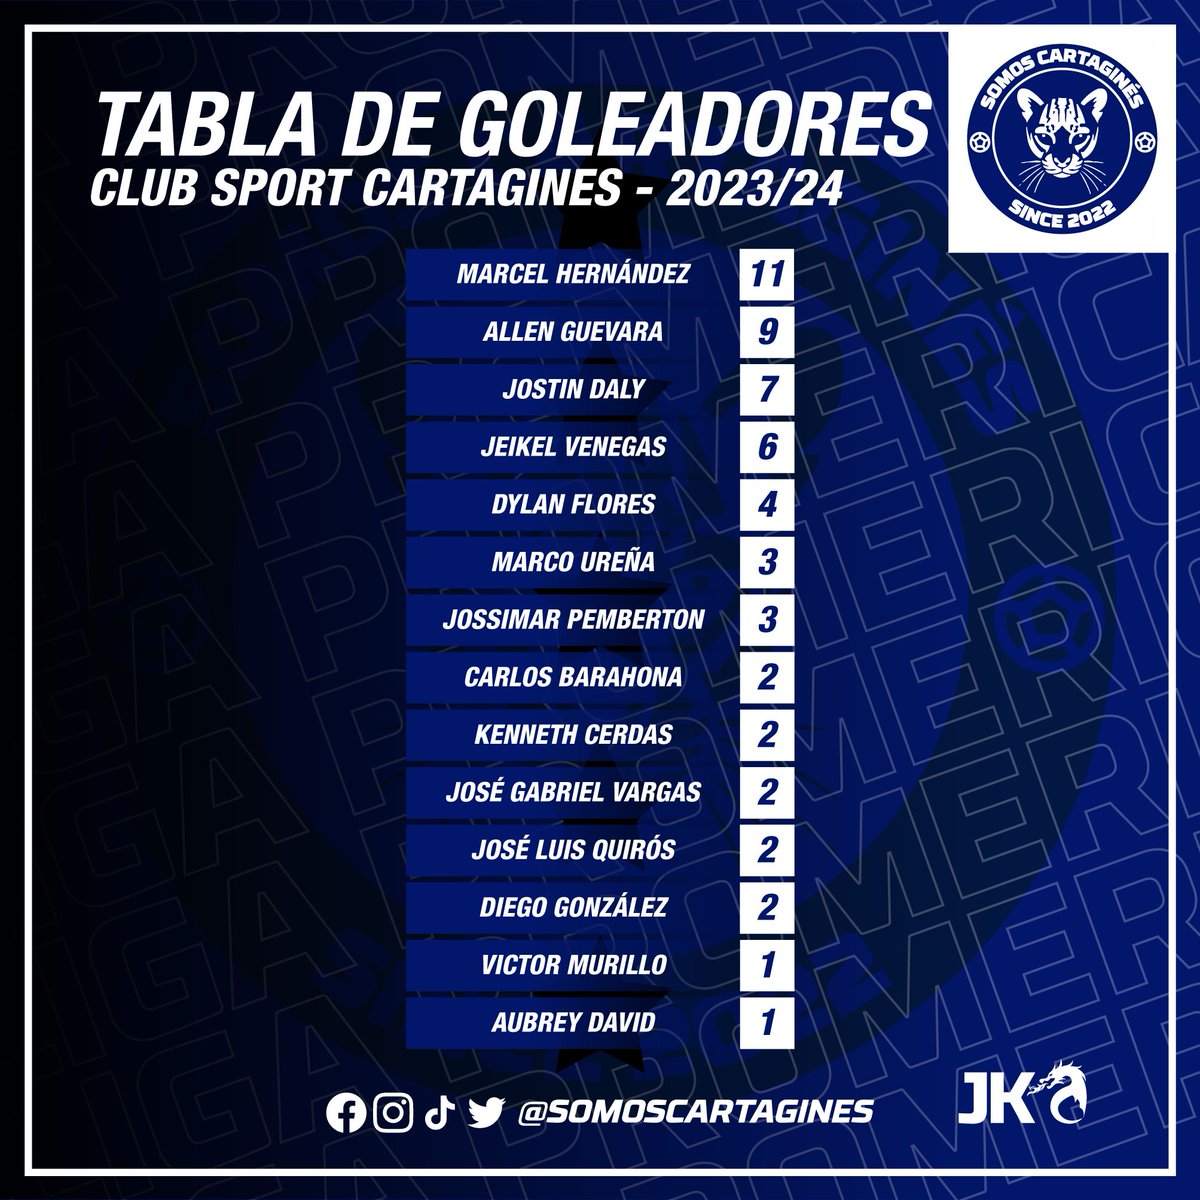 #GoleadoresCSC
Así está la tabla de goleadores del CSC de la Temporada 23/24 de la Liga Promerica.
#1CSC #VamosCartagines